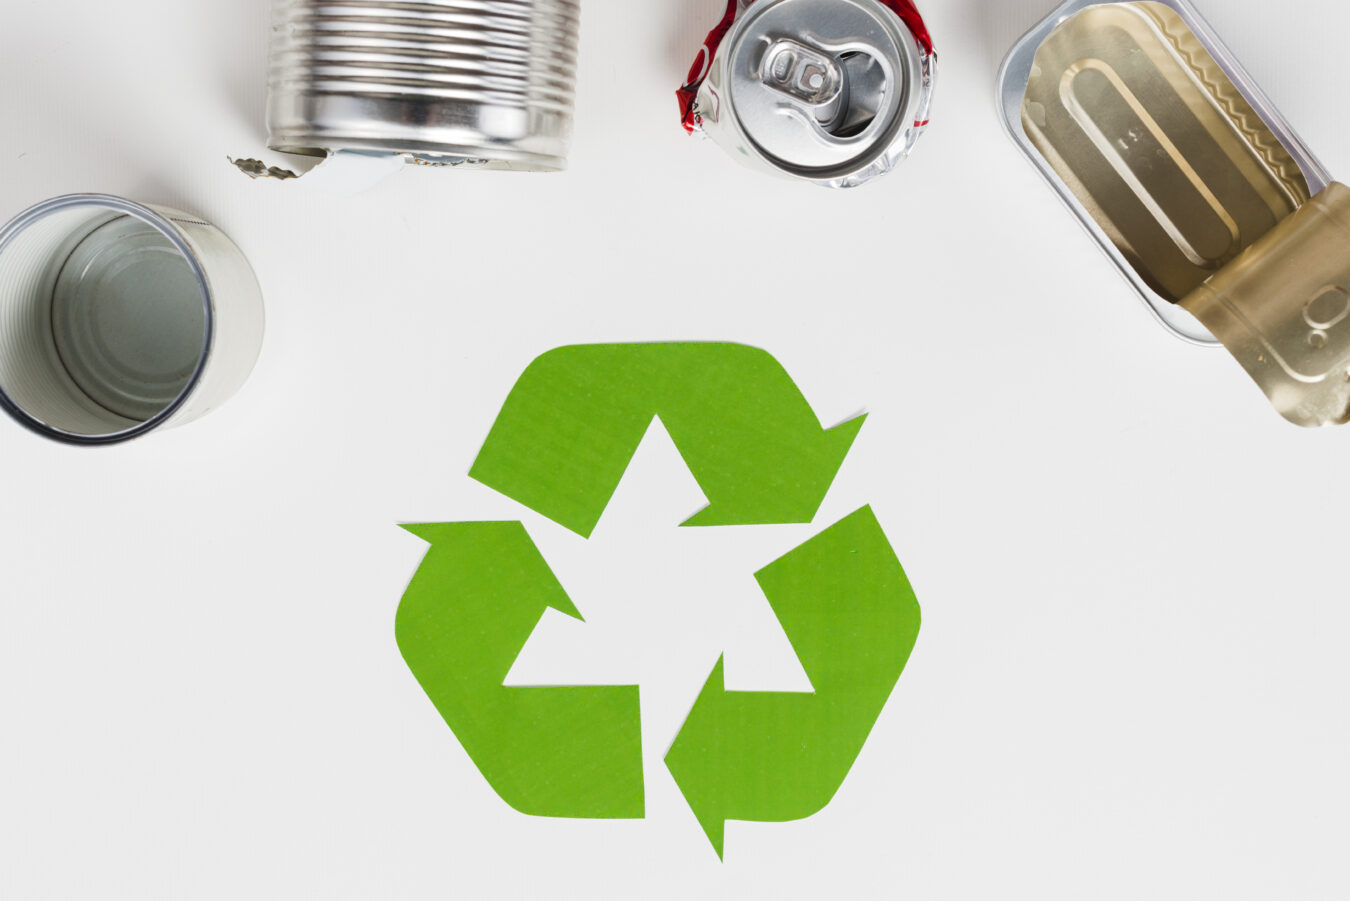 recycling-symbol-beside-used-metallic-packaging